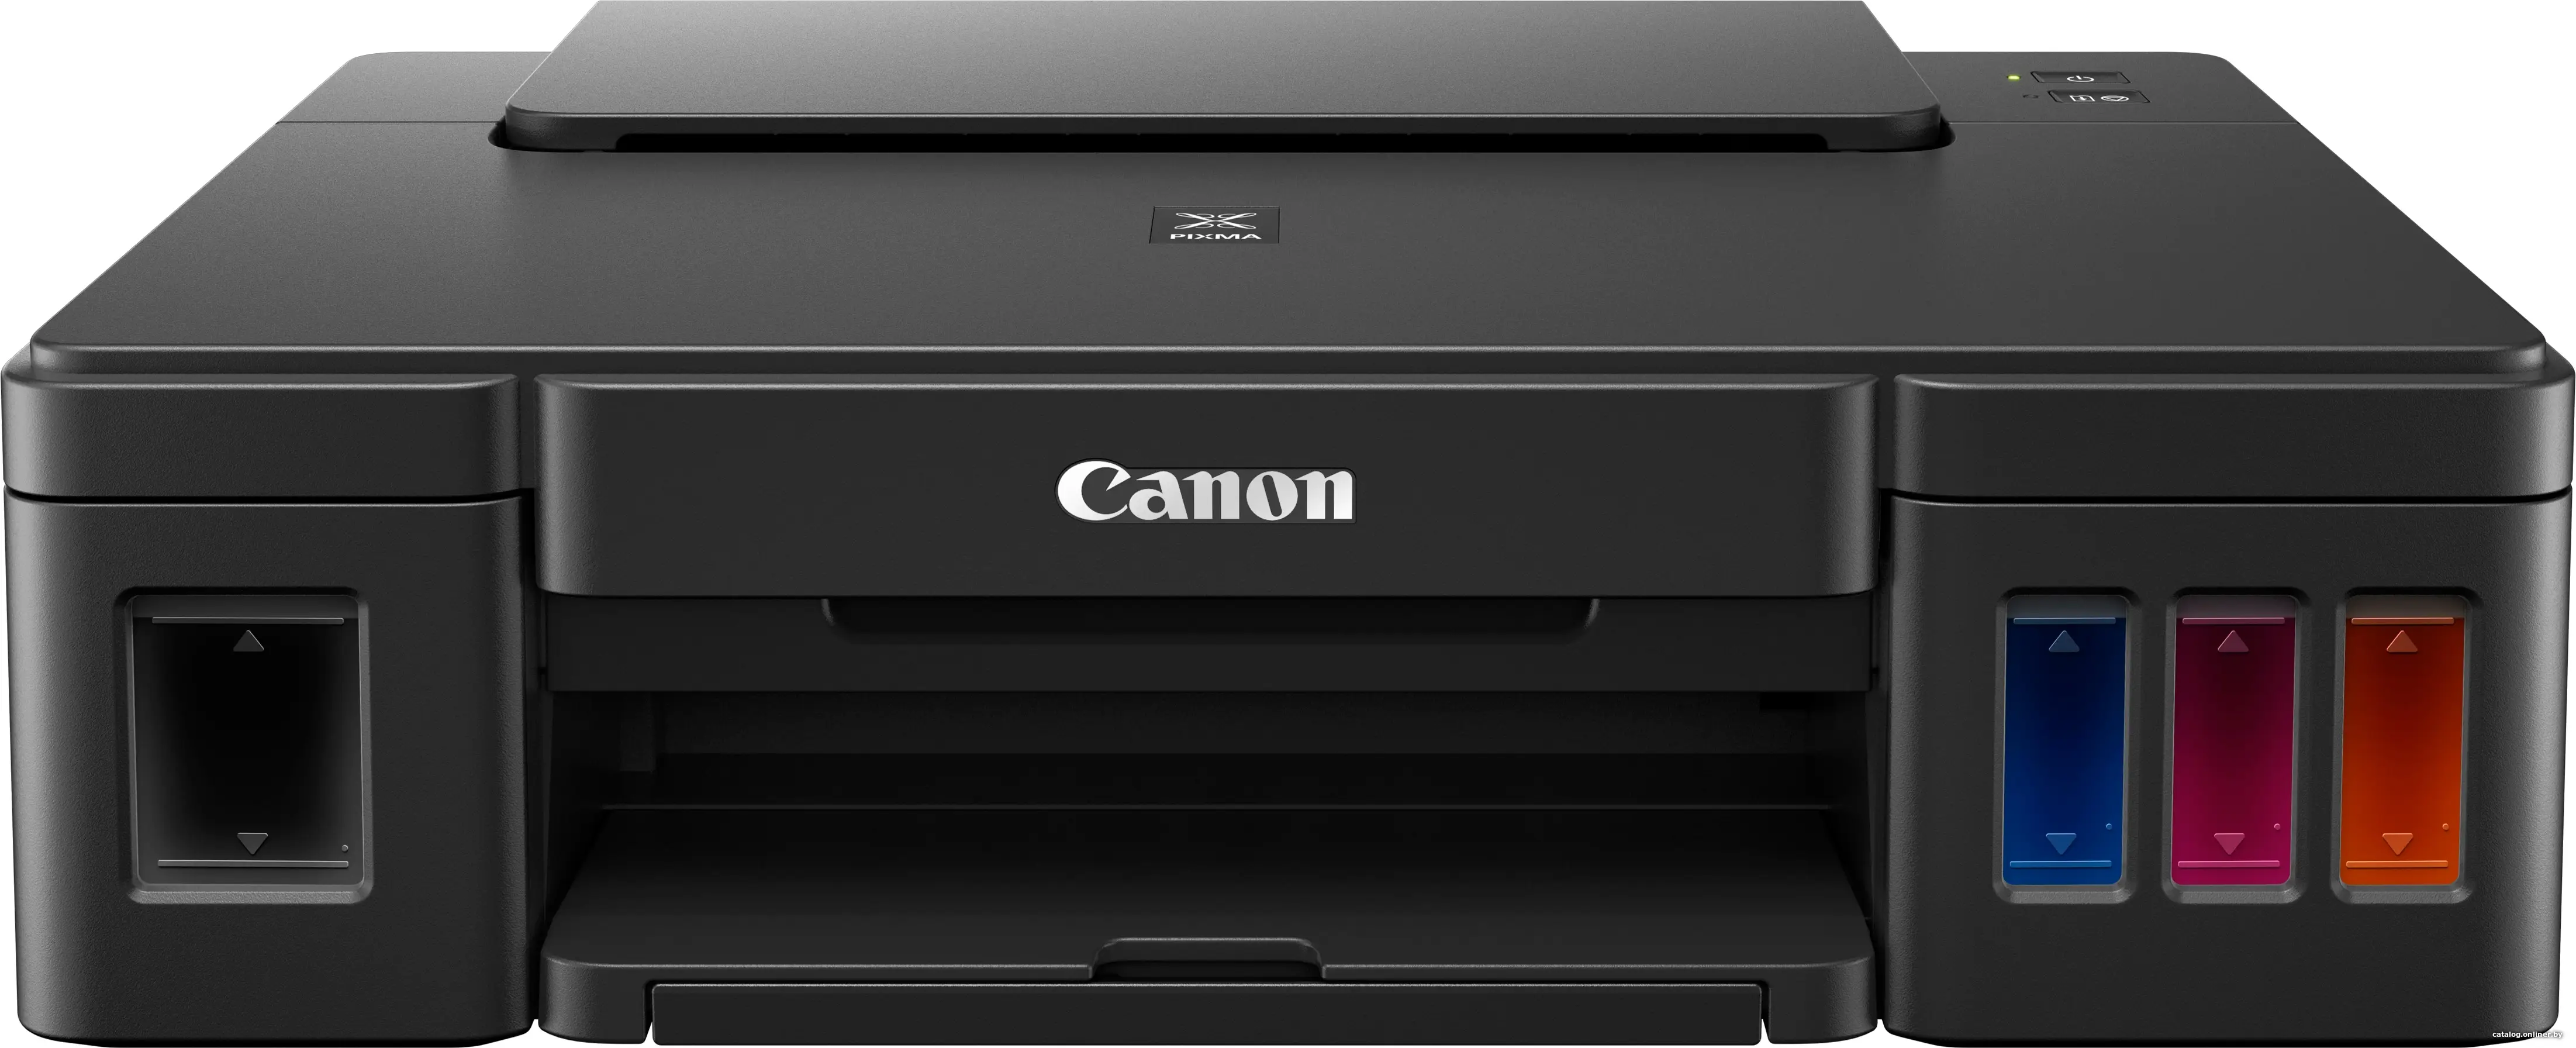 Купить Принтер Canon PIXMA G1410, цена, опт и розница